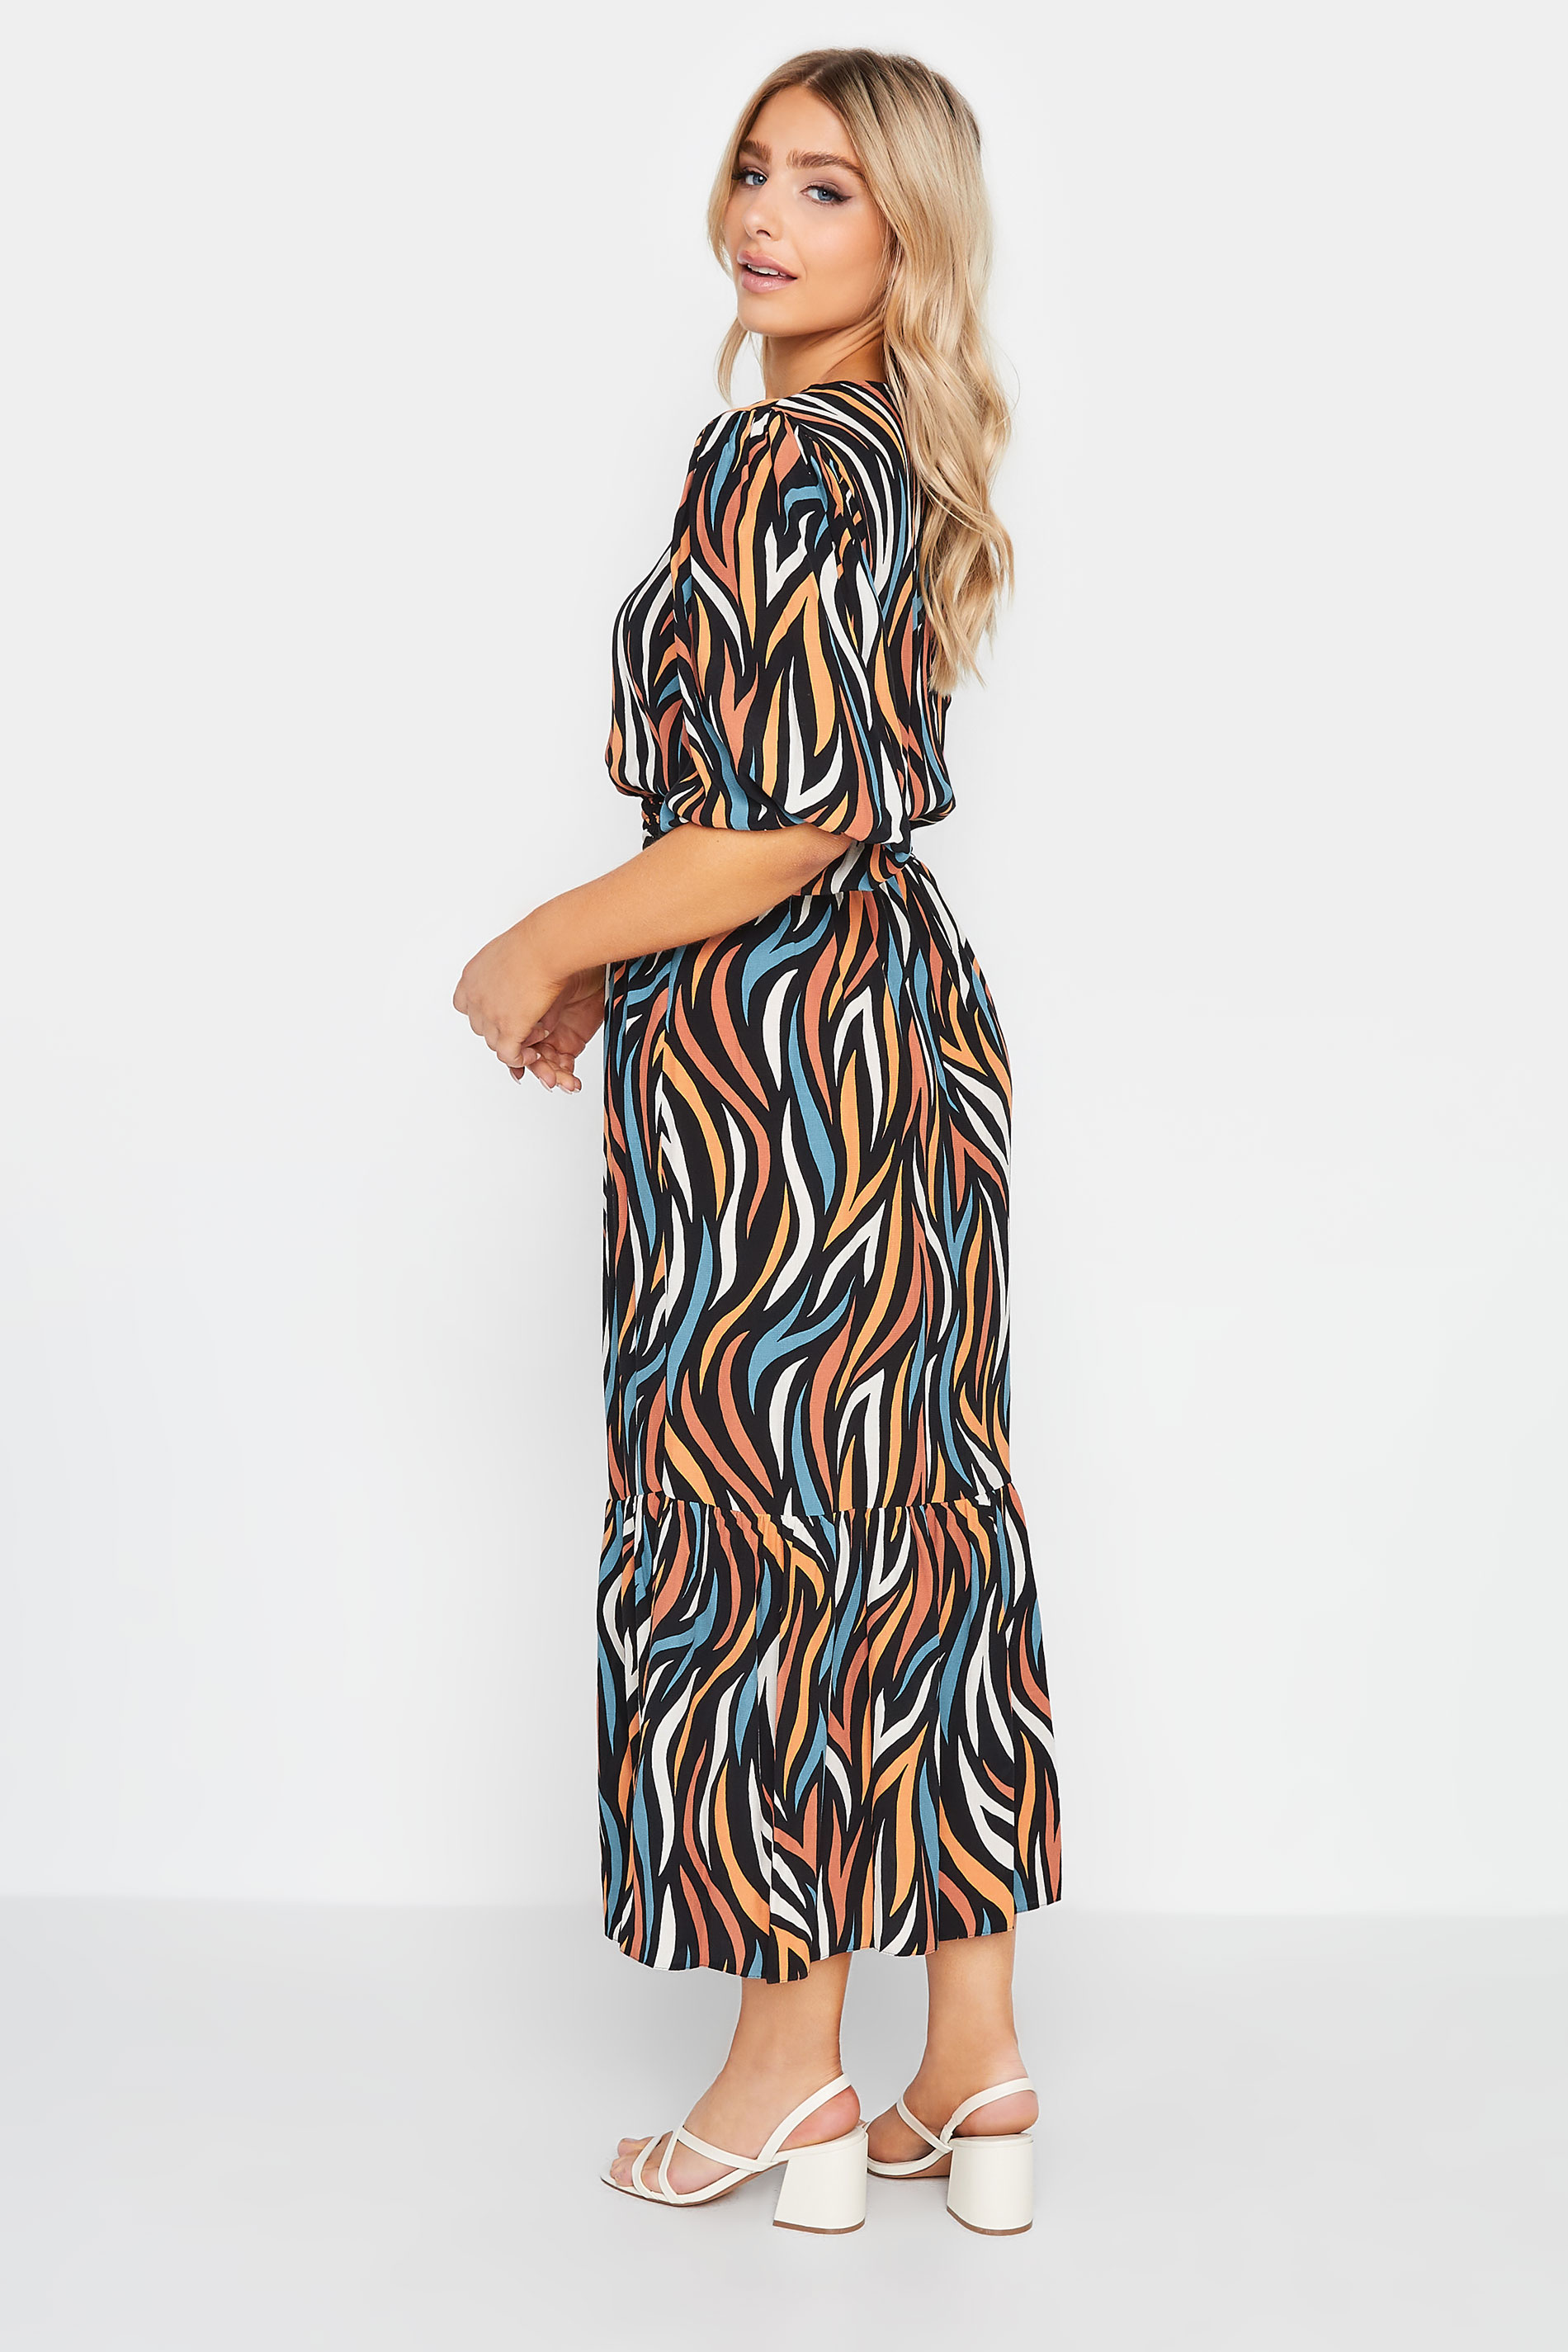 M&Co Black Abstract Print Maxi Dress | M&Co 3